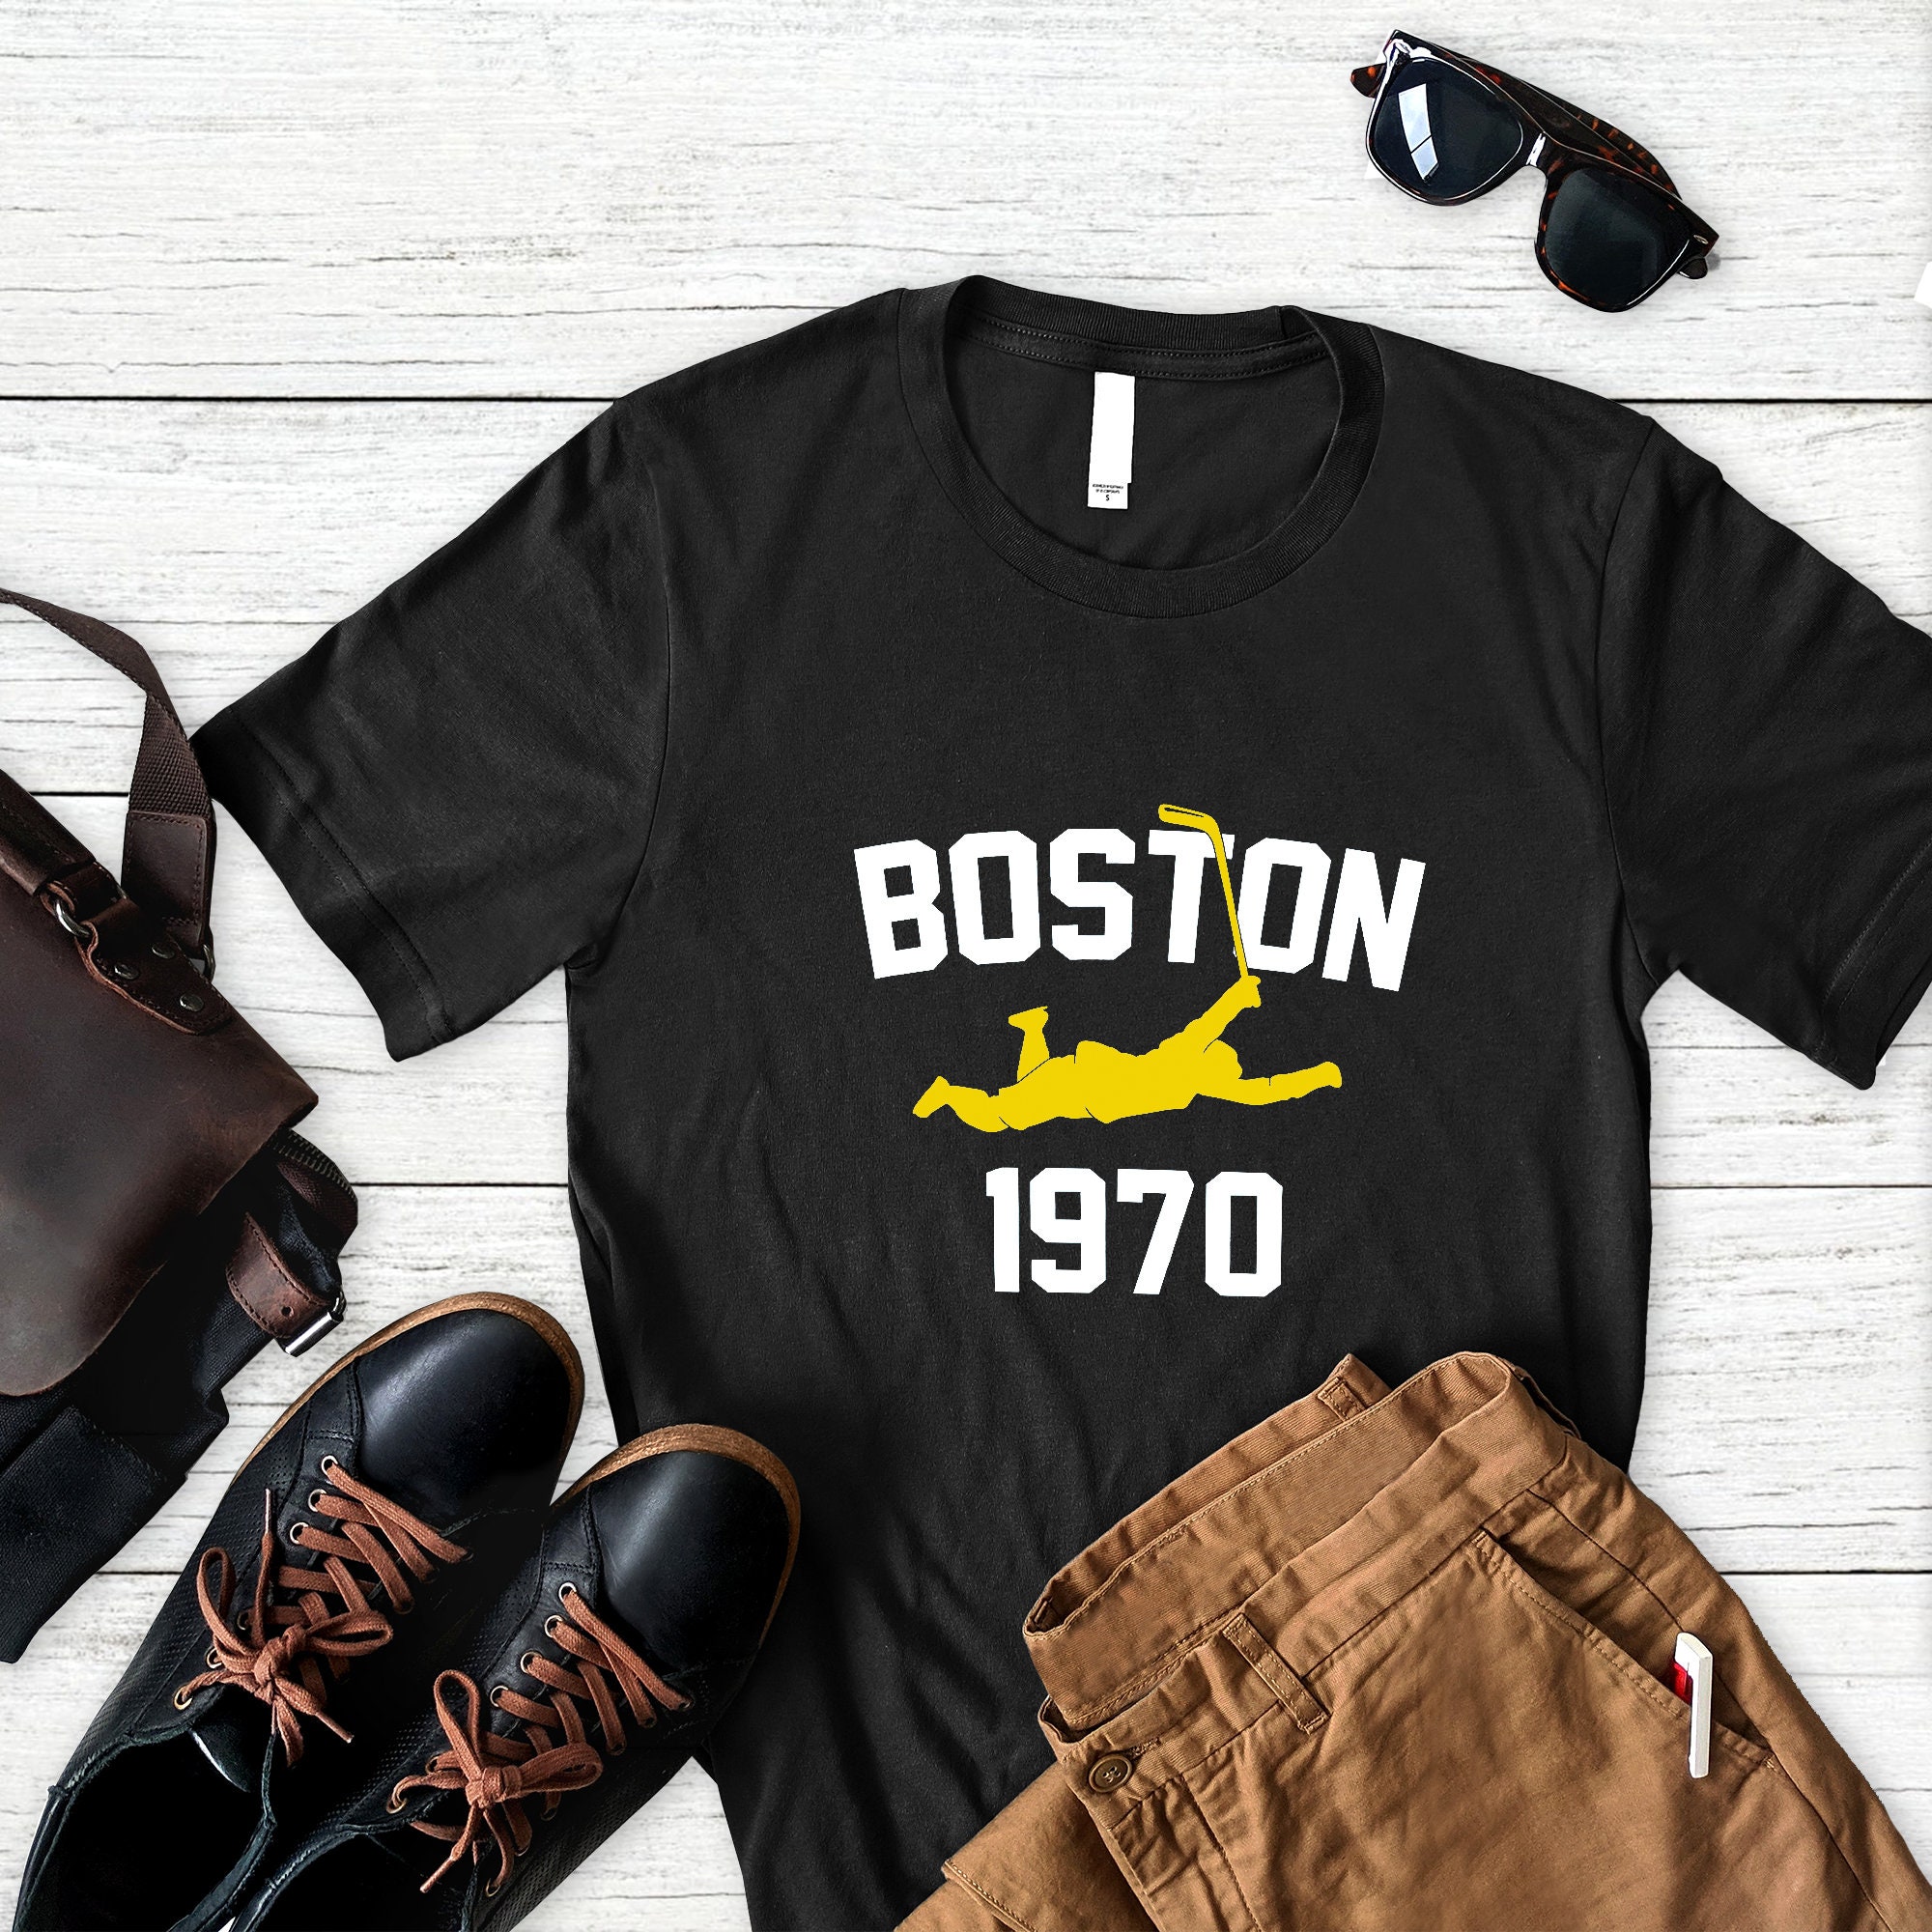 BeantownTshirts Bobby Orr Scoring and Soaring Air Orr Boston Hockey Fan V3 T Shirt V-Neck / Black / 3 X-Large